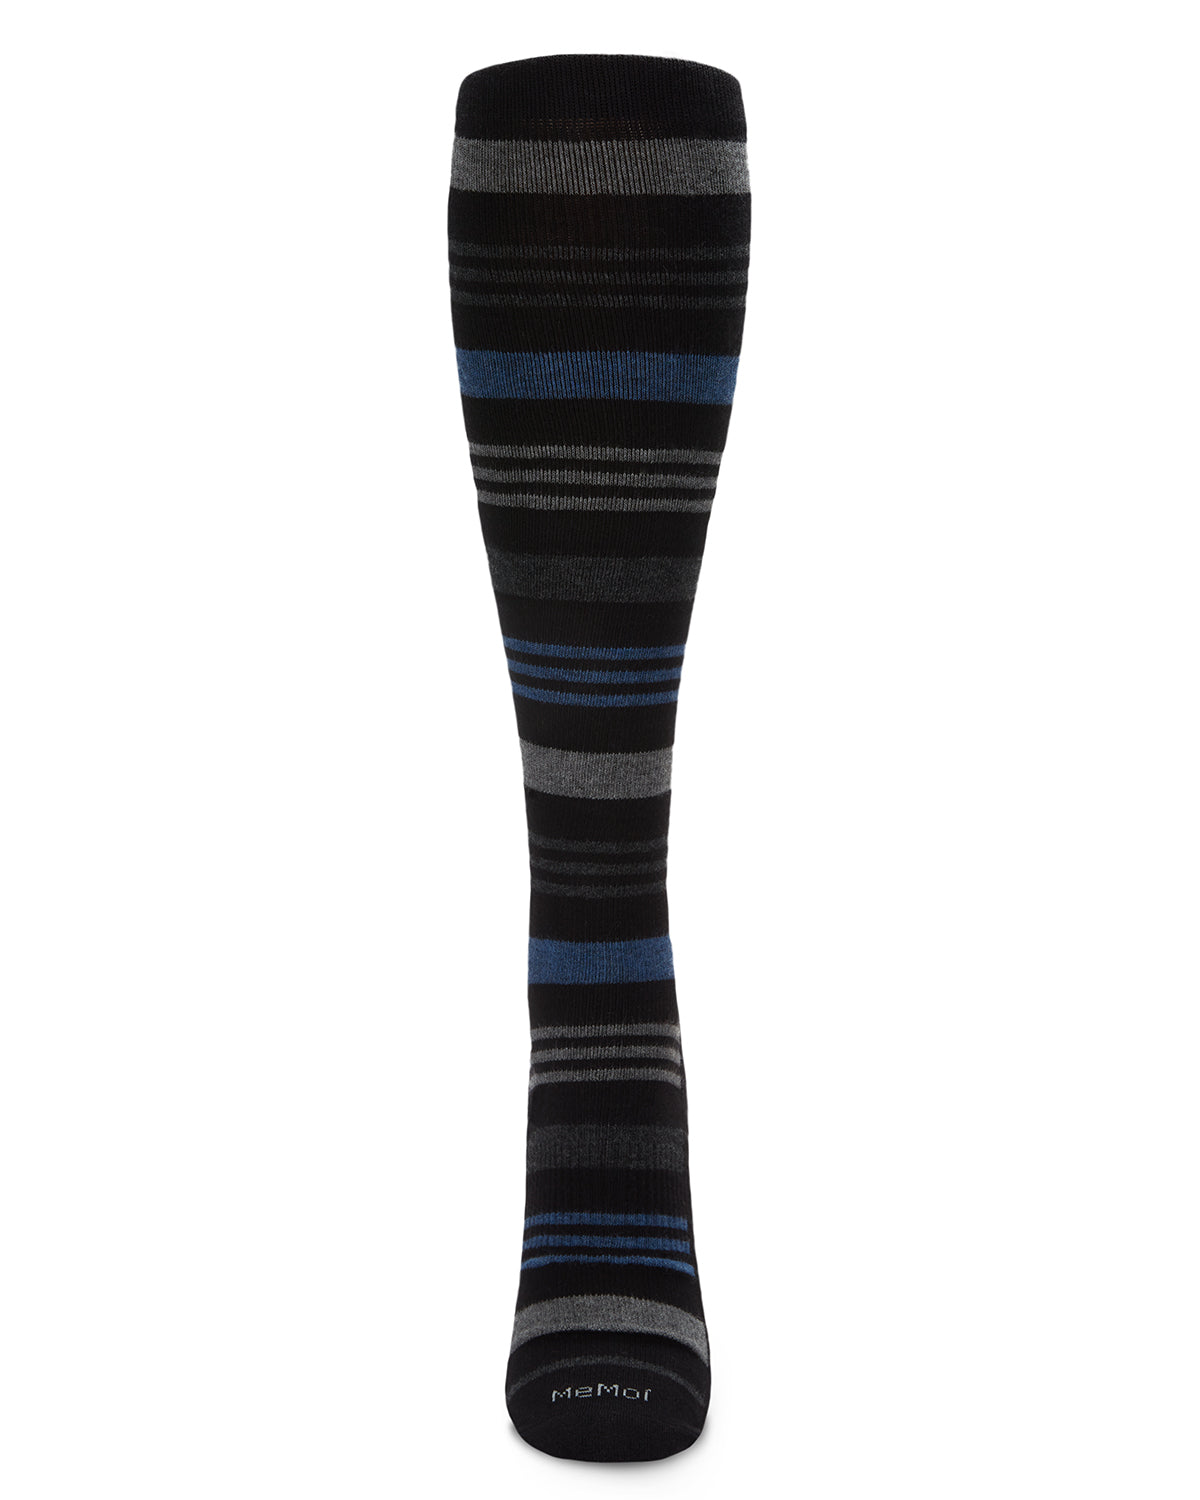 Unisex Black Multi Striped Cotton Blend 15-20mmHg Graduated Compression Socks